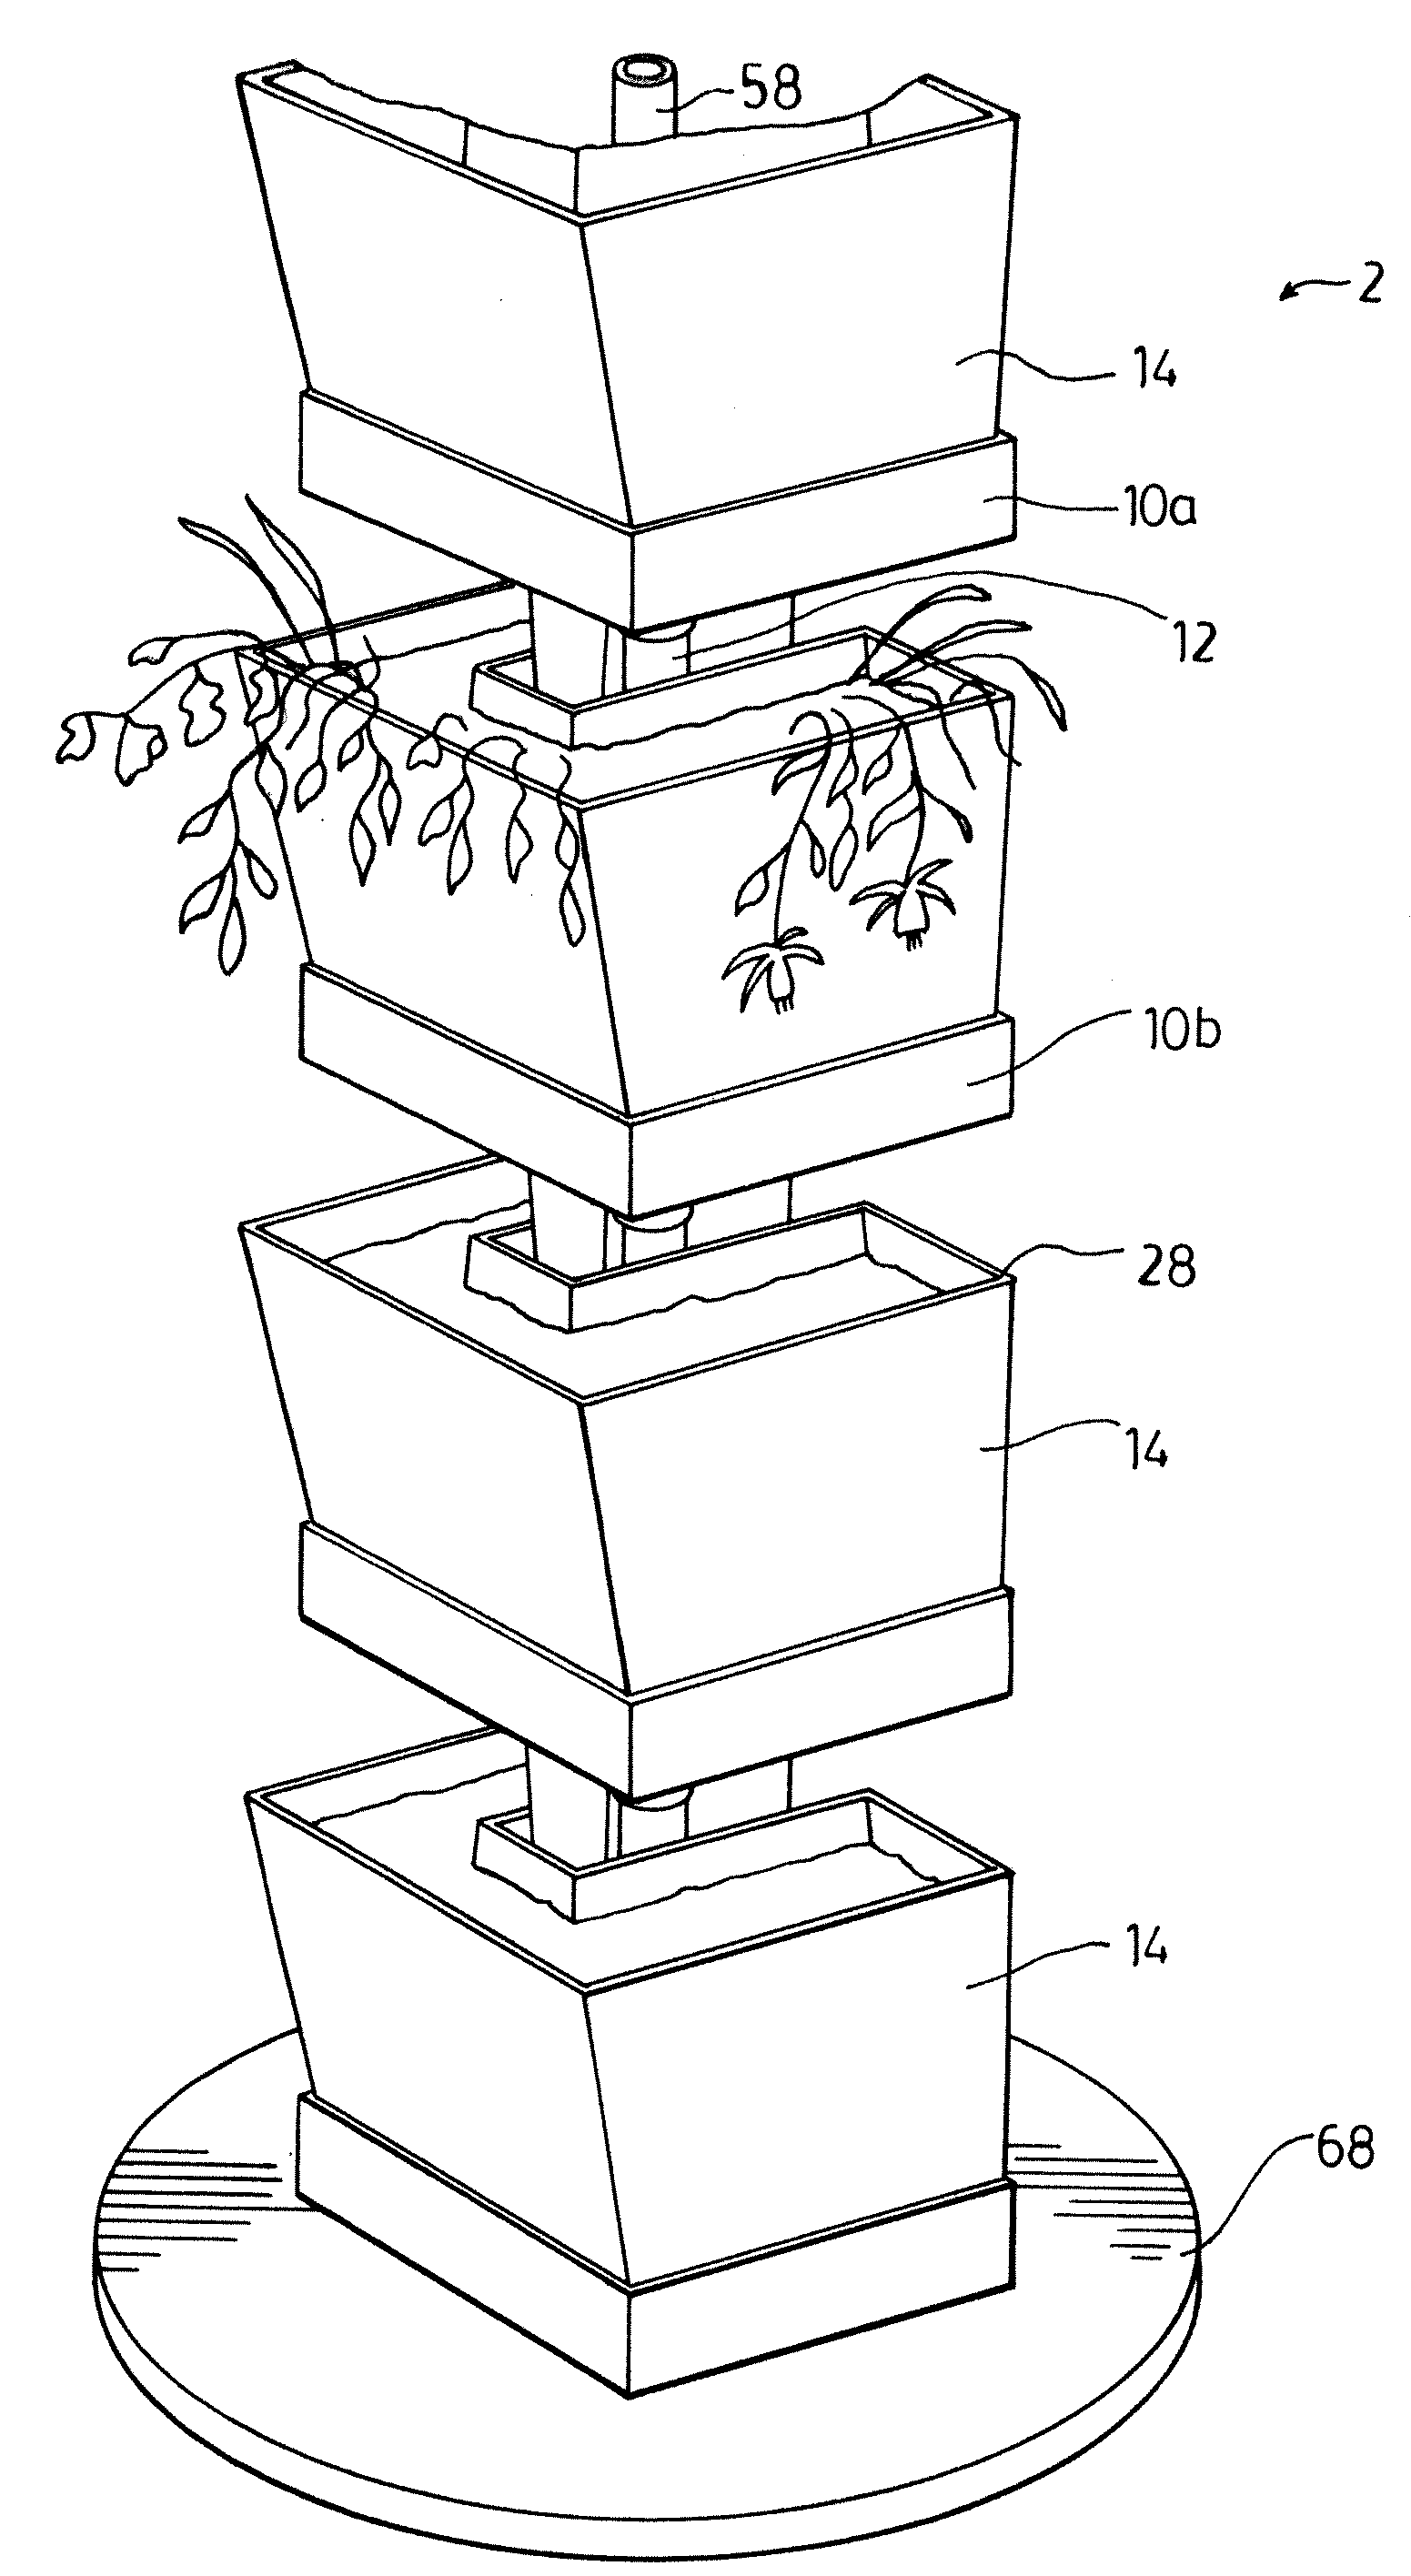 Modular planter system